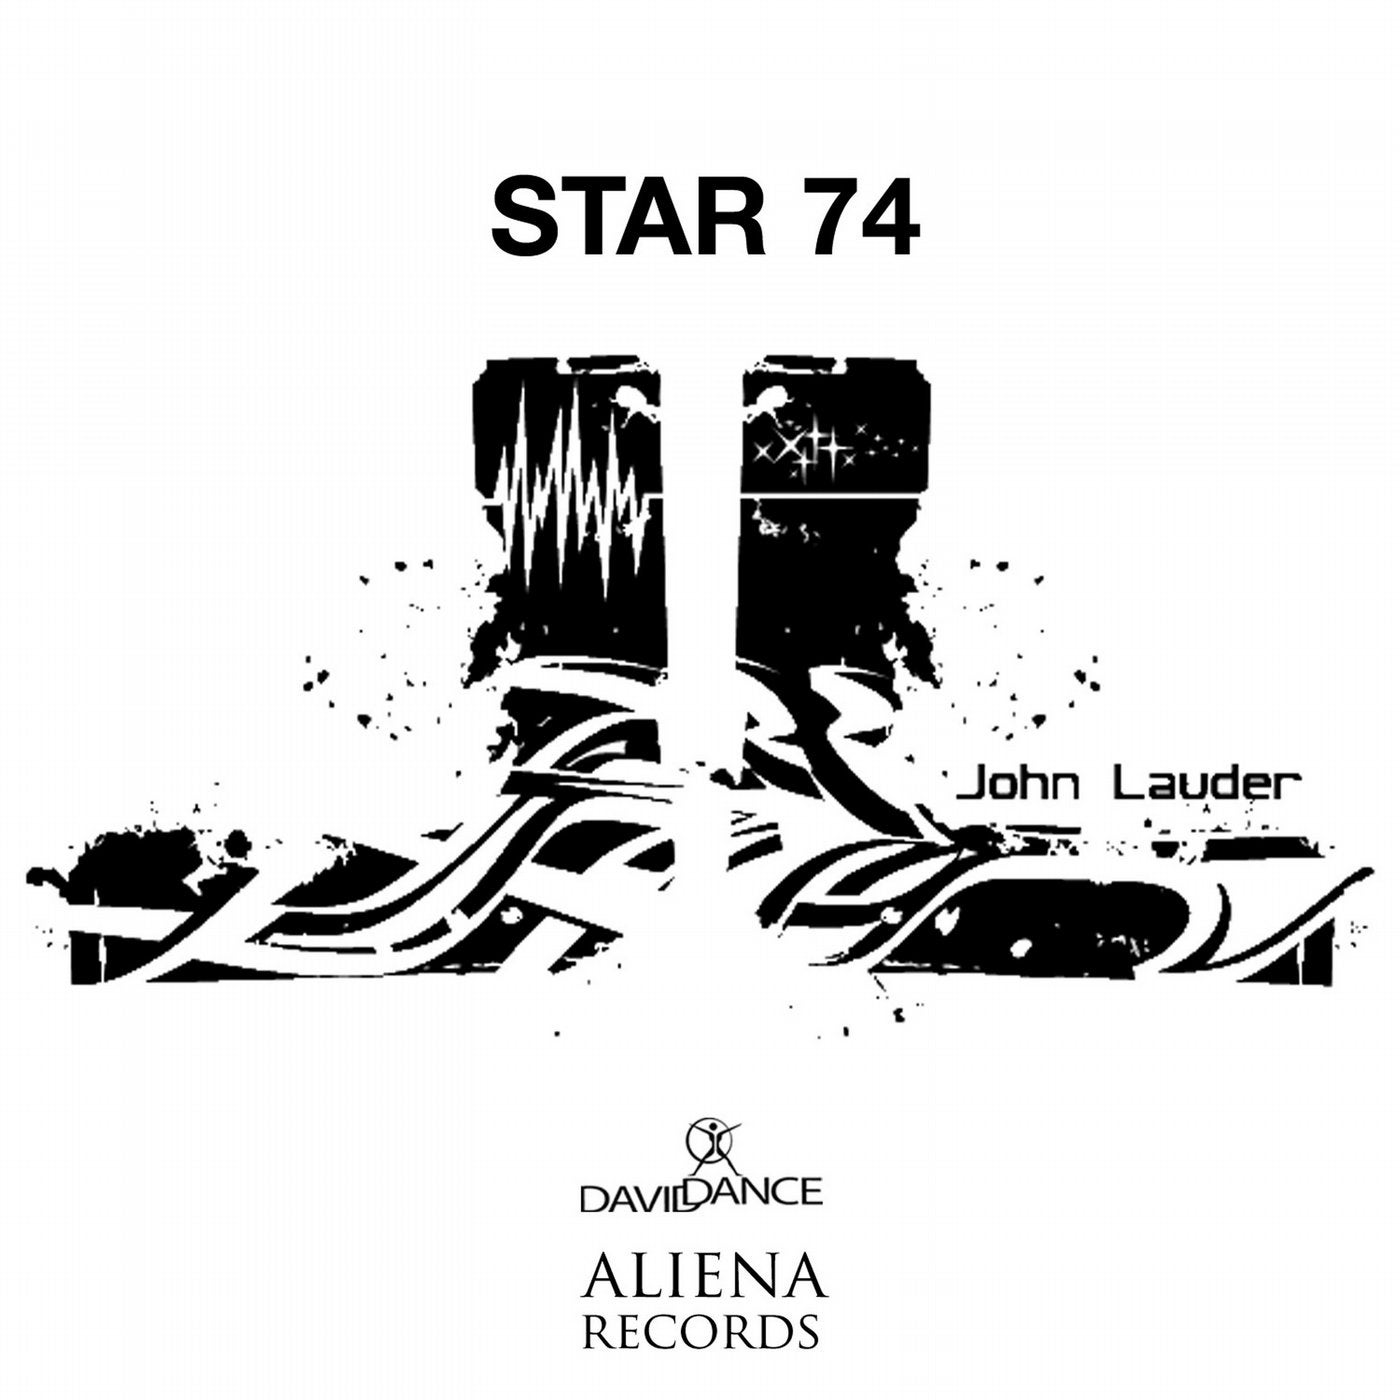 Star 74